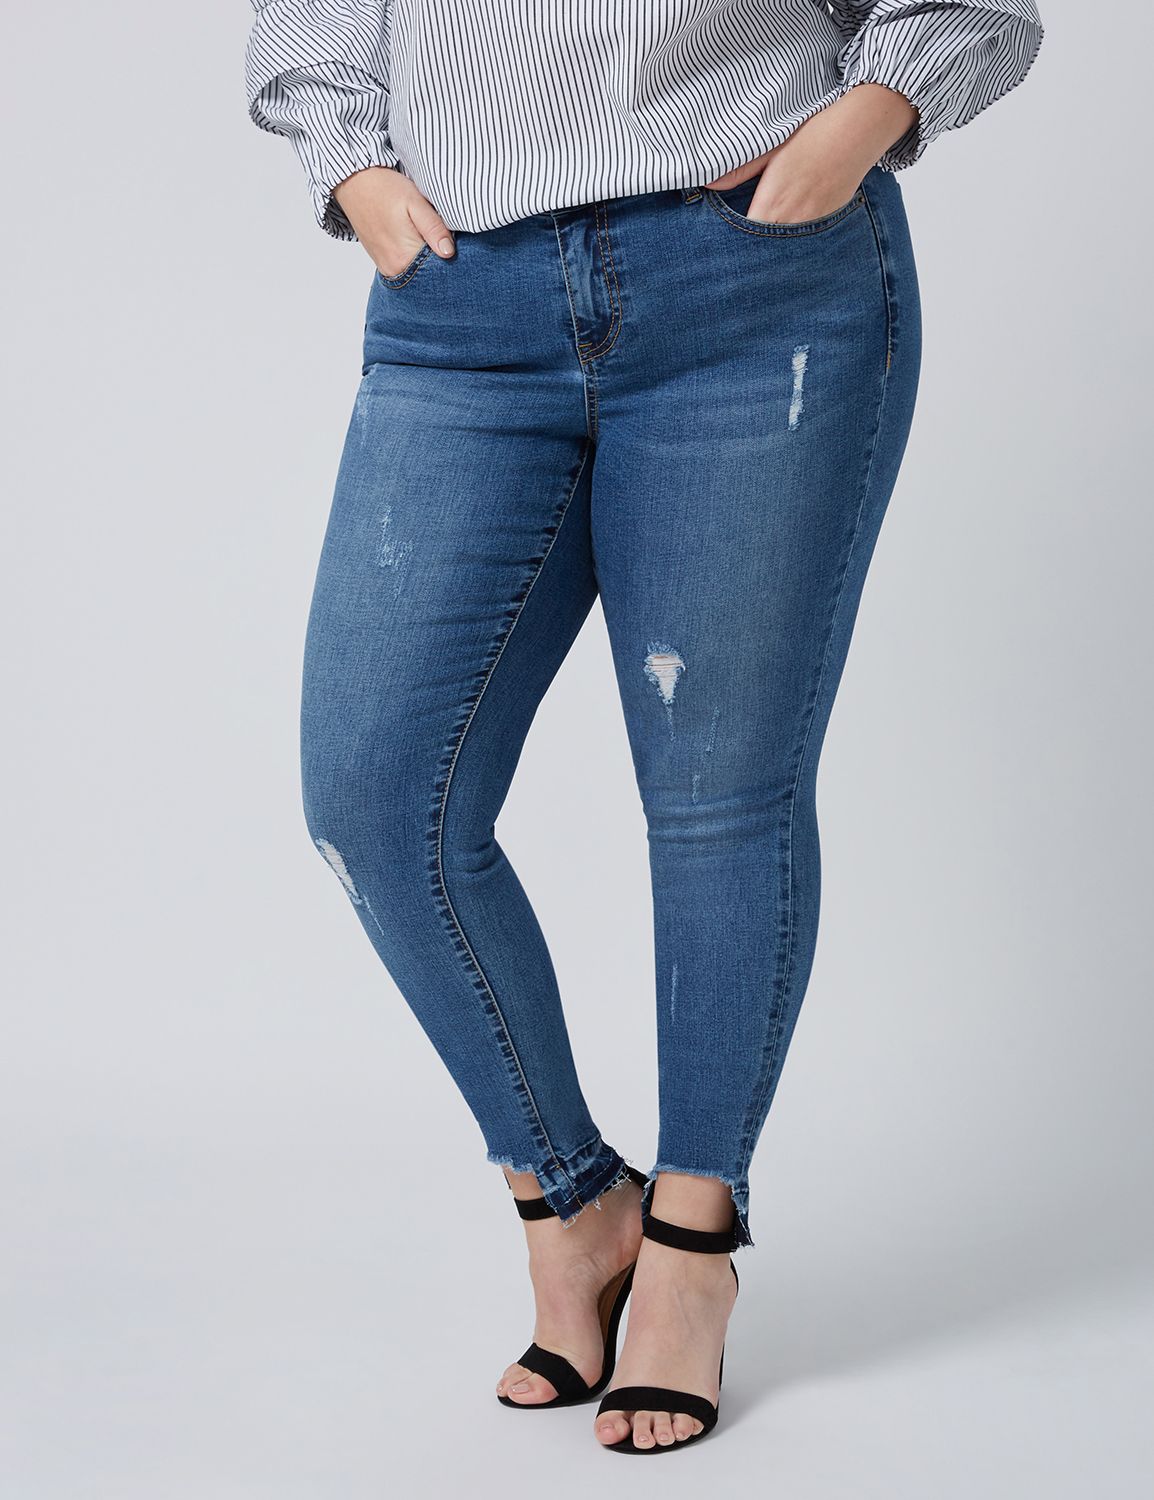 Plus Size Skinny Jeans & Women's Slim Fit Denim | Plus Size Jeans ...